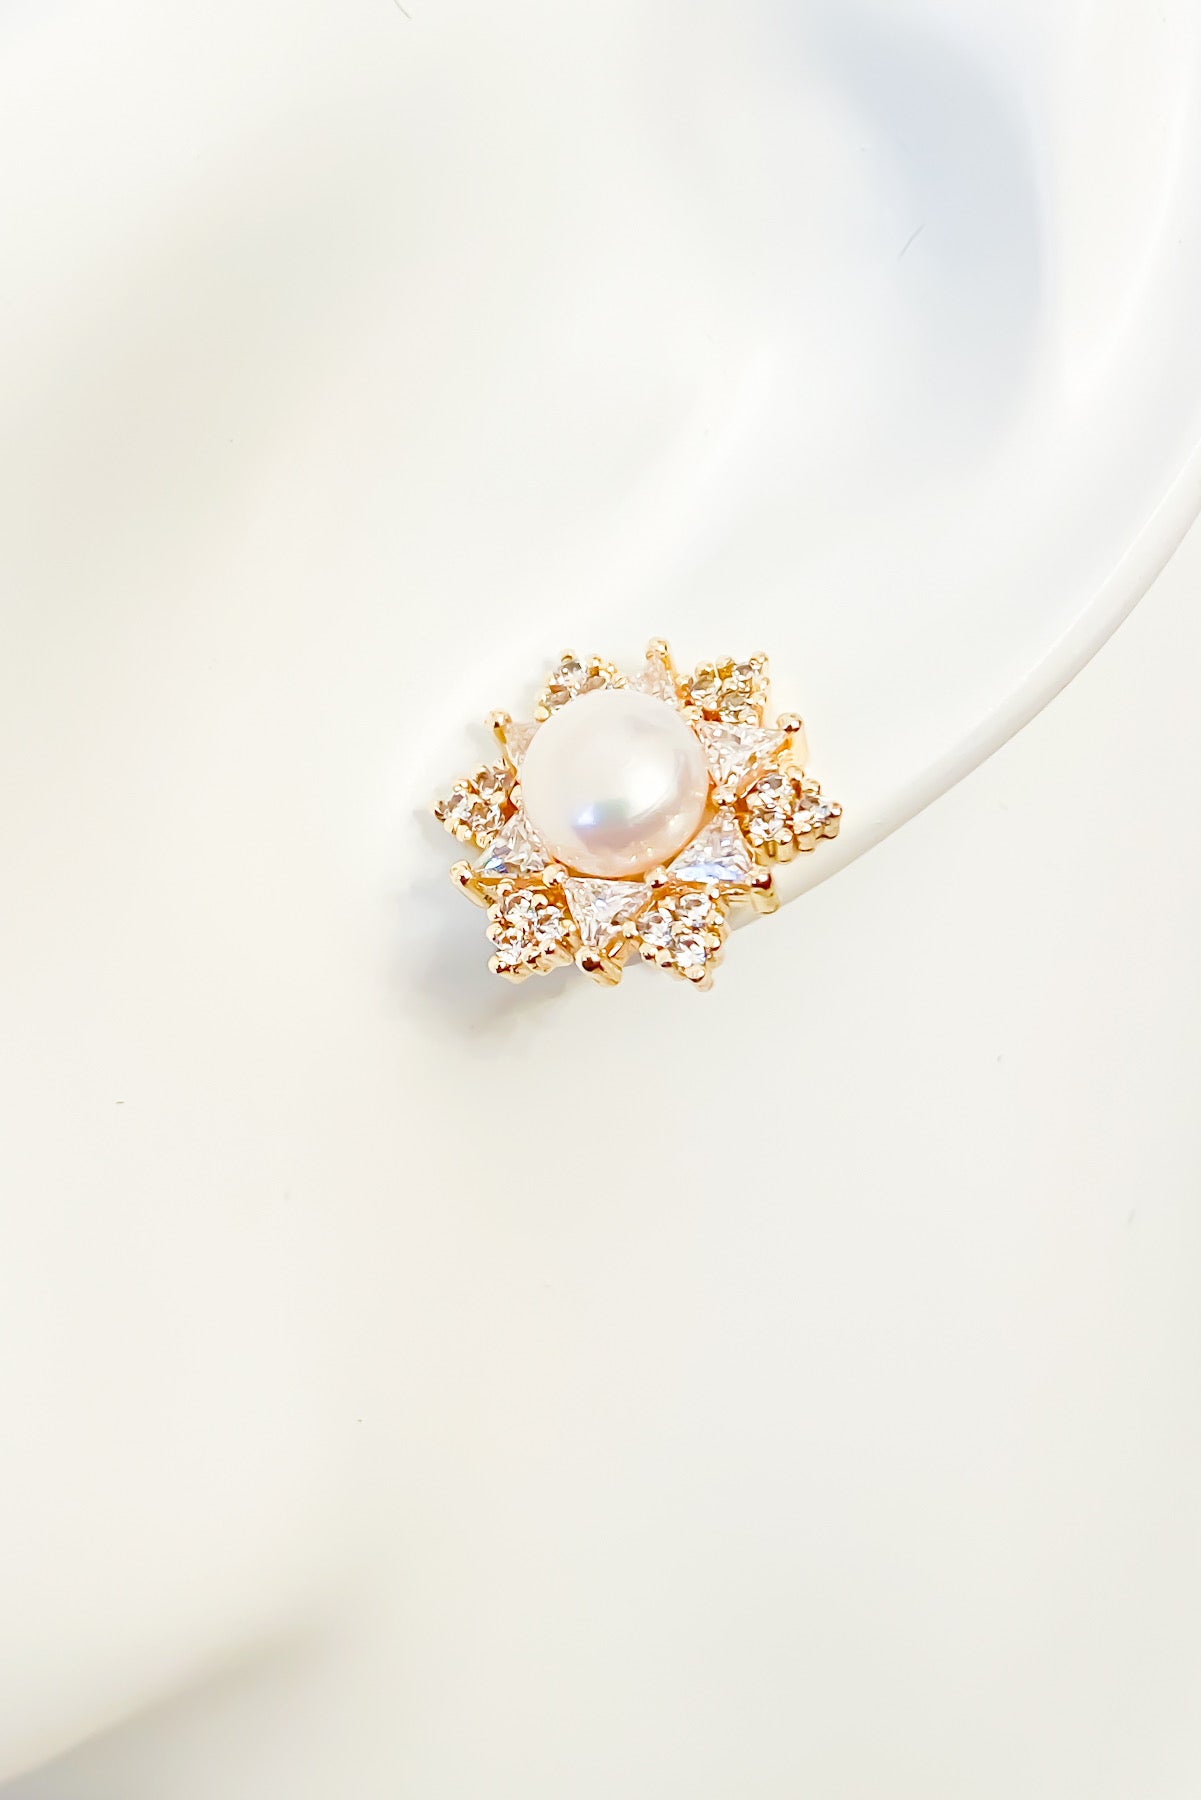 SKYE San Francisco Shop Chic Modern Elegant Classy Women Jewelry French Parisian Minimalist Elisa 18K Gold Crystal Pearl Earrings 3